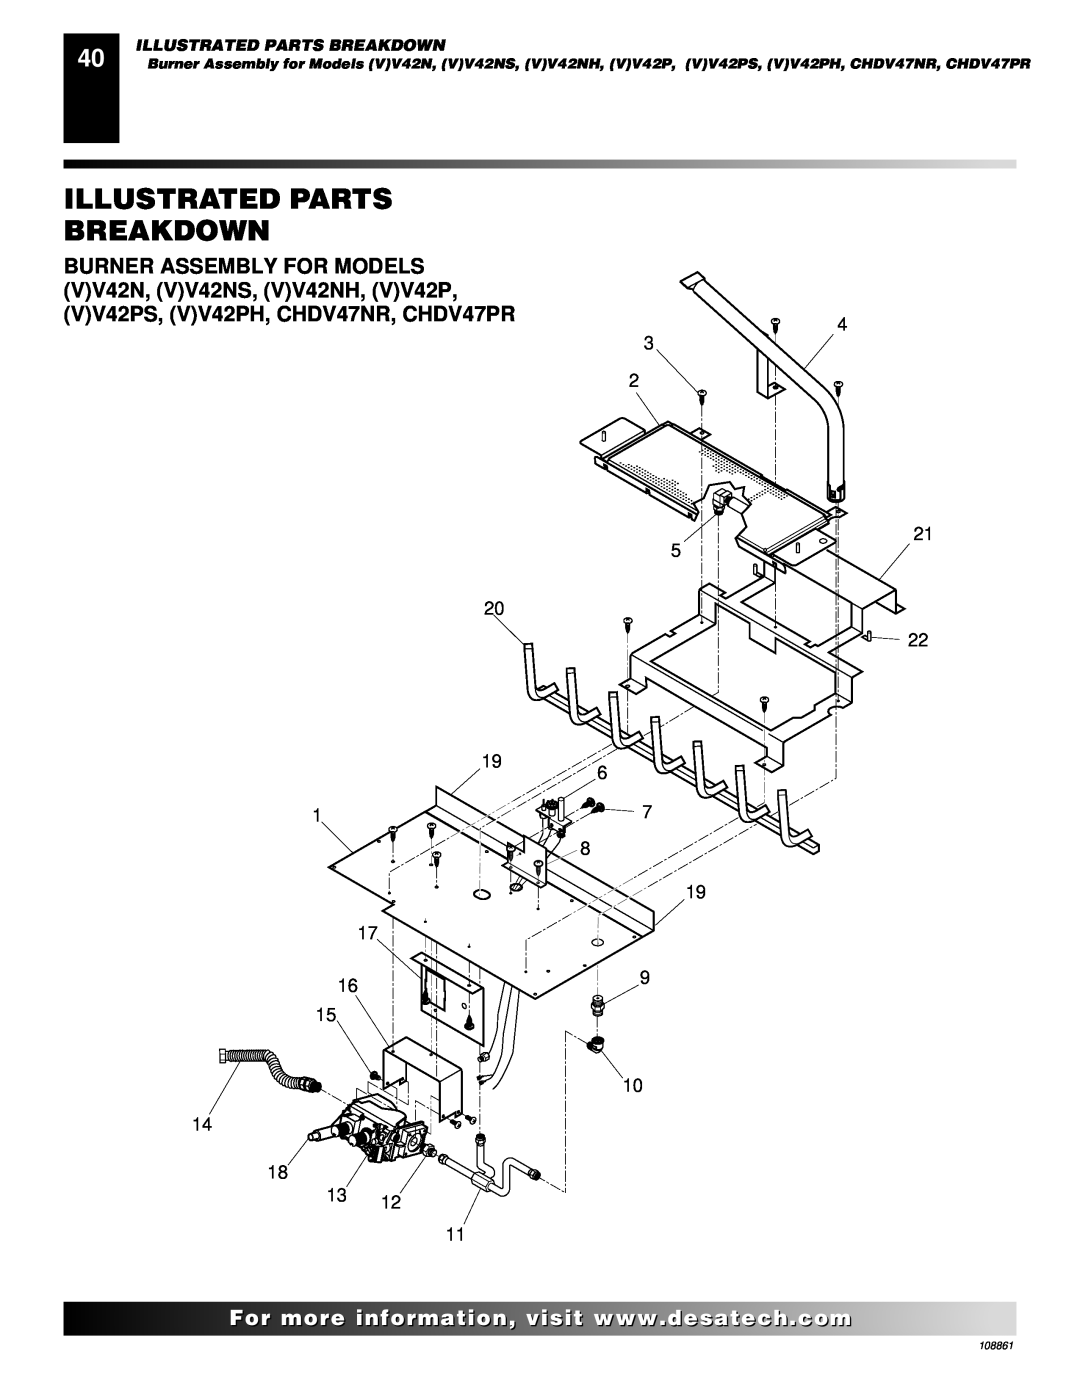 Desa CHDV47NR, (V)V36N, CHDV47PR installation manual Illustrated Parts Breakdown, 20 19 1 17 16, 4 3 2 21 5 22 6 7 8, 108861 